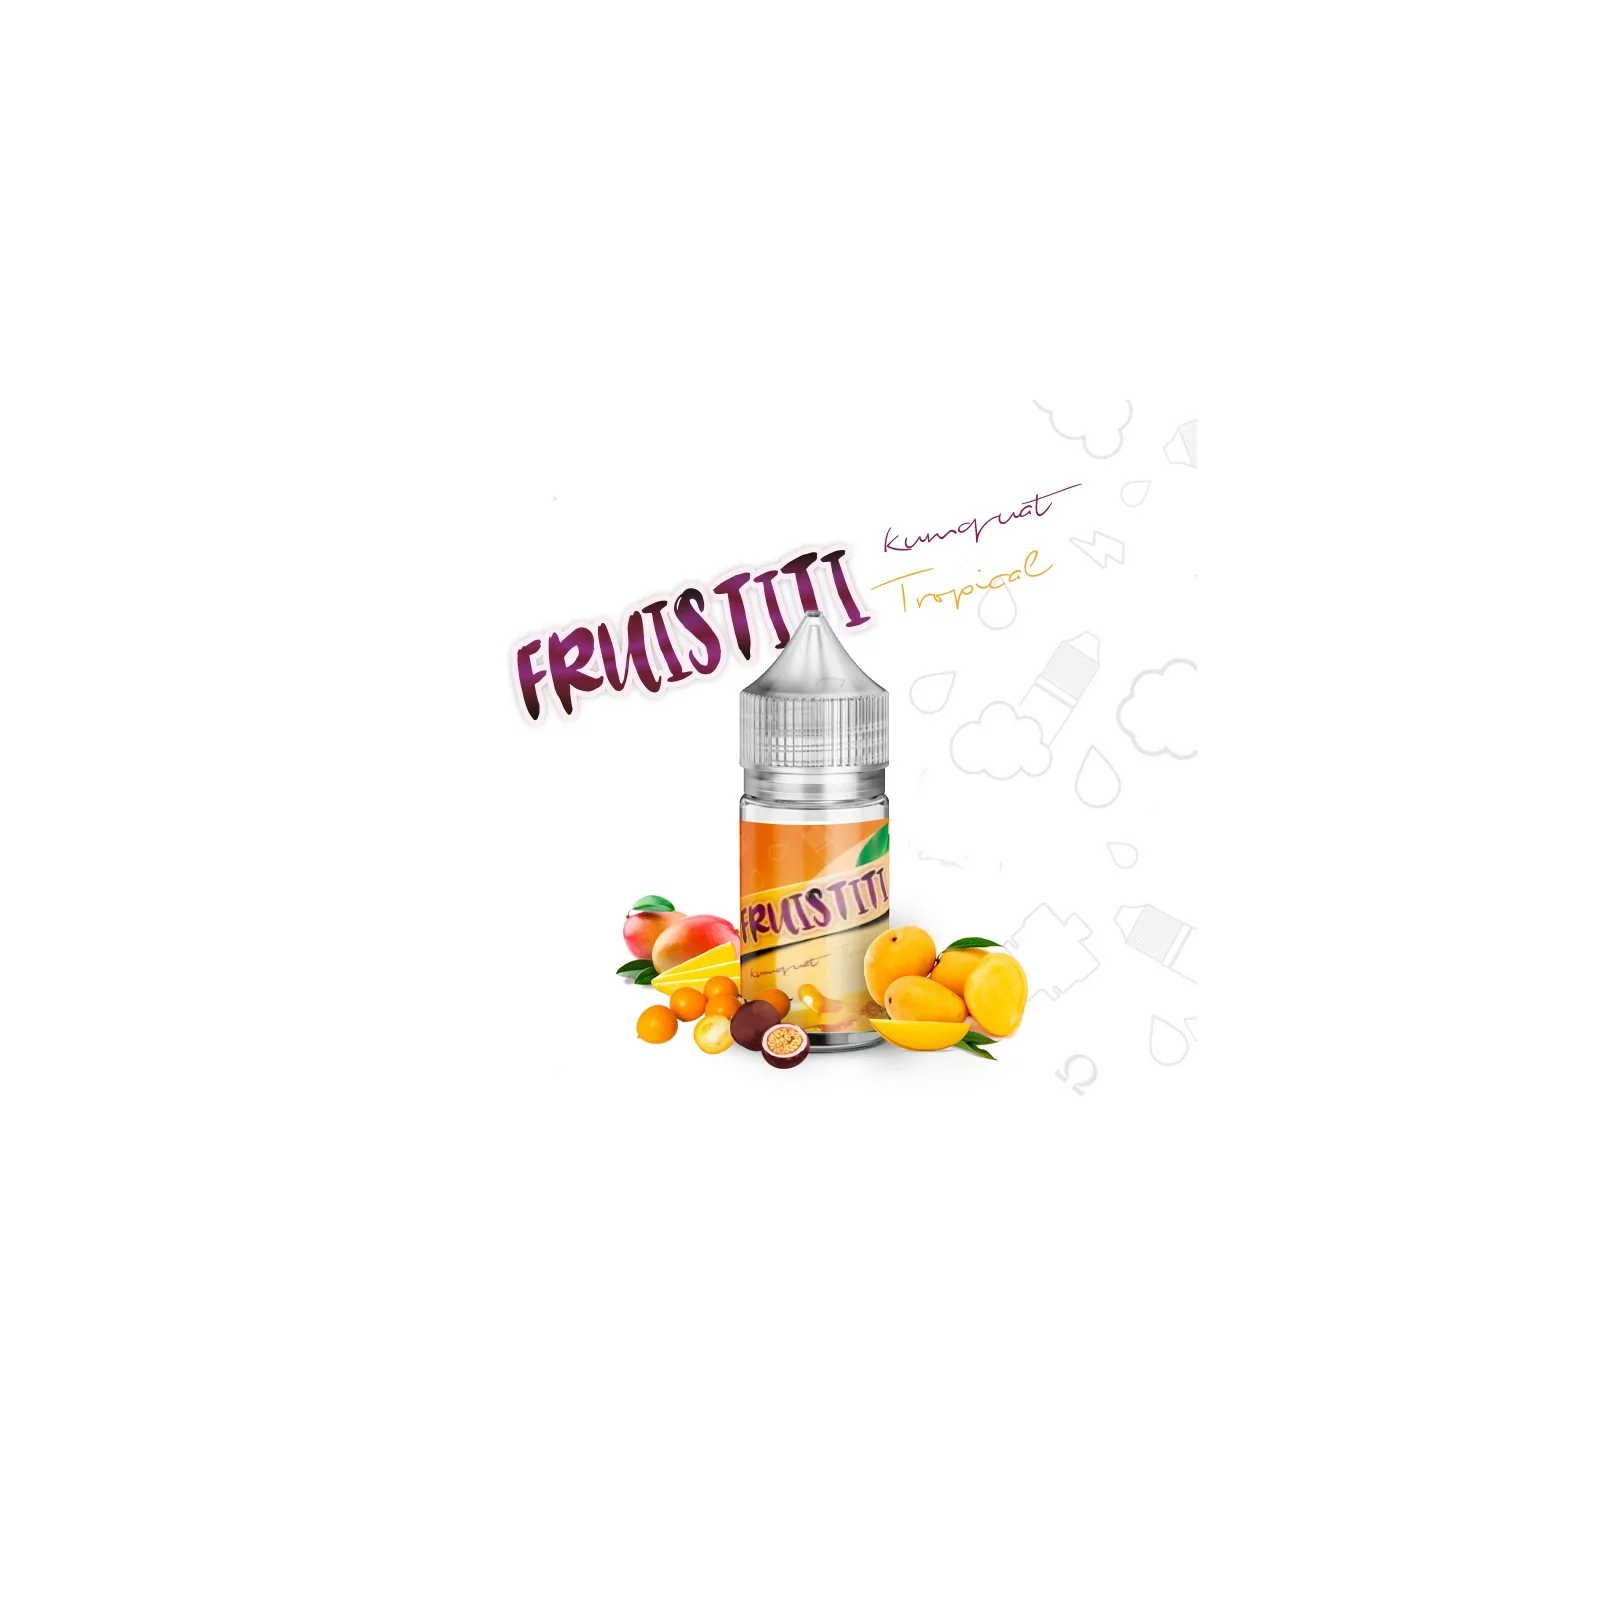 Concentré Kumquat Tropical 30ml - Fruistiti